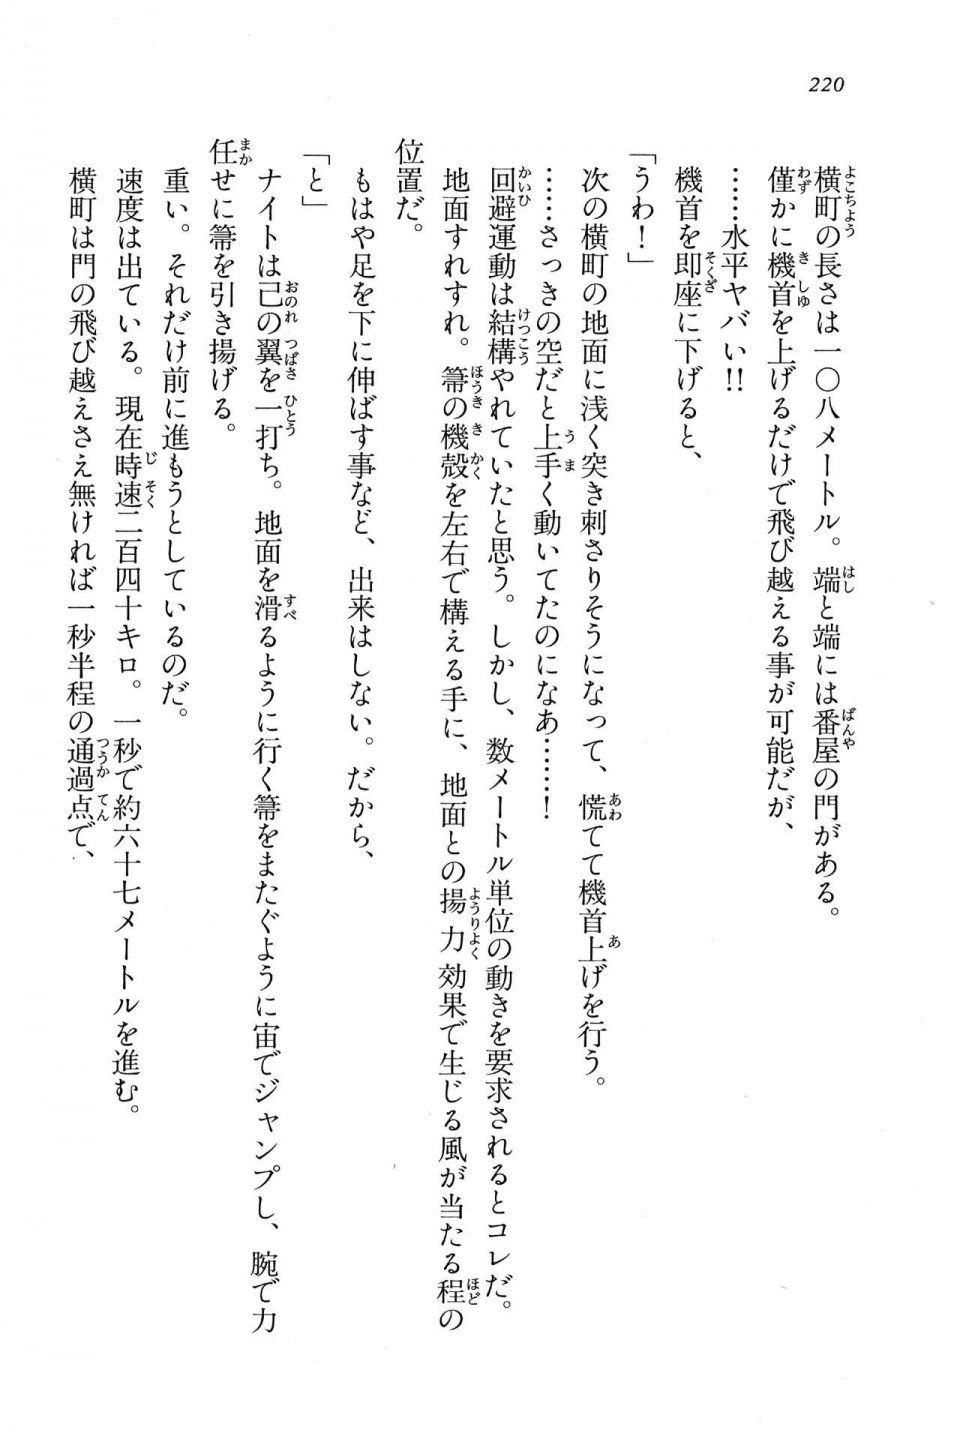 Kyoukai Senjou no Horizon BD Special Mininovel Vol 7(4A) - Photo #224